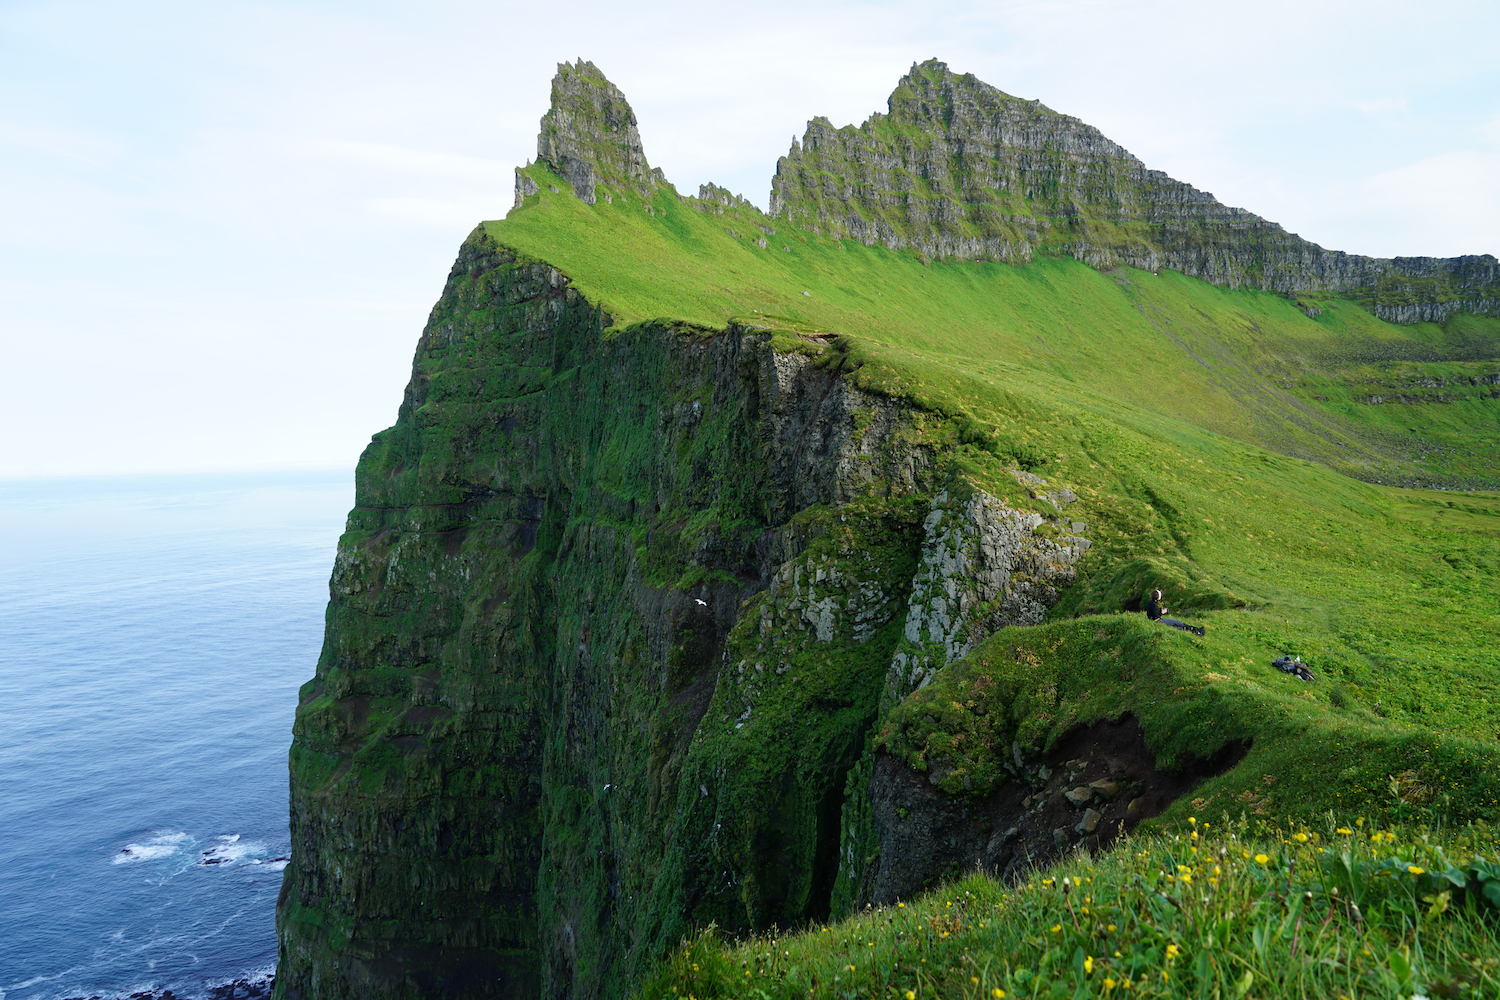 The impressive cliffs of the westfjords